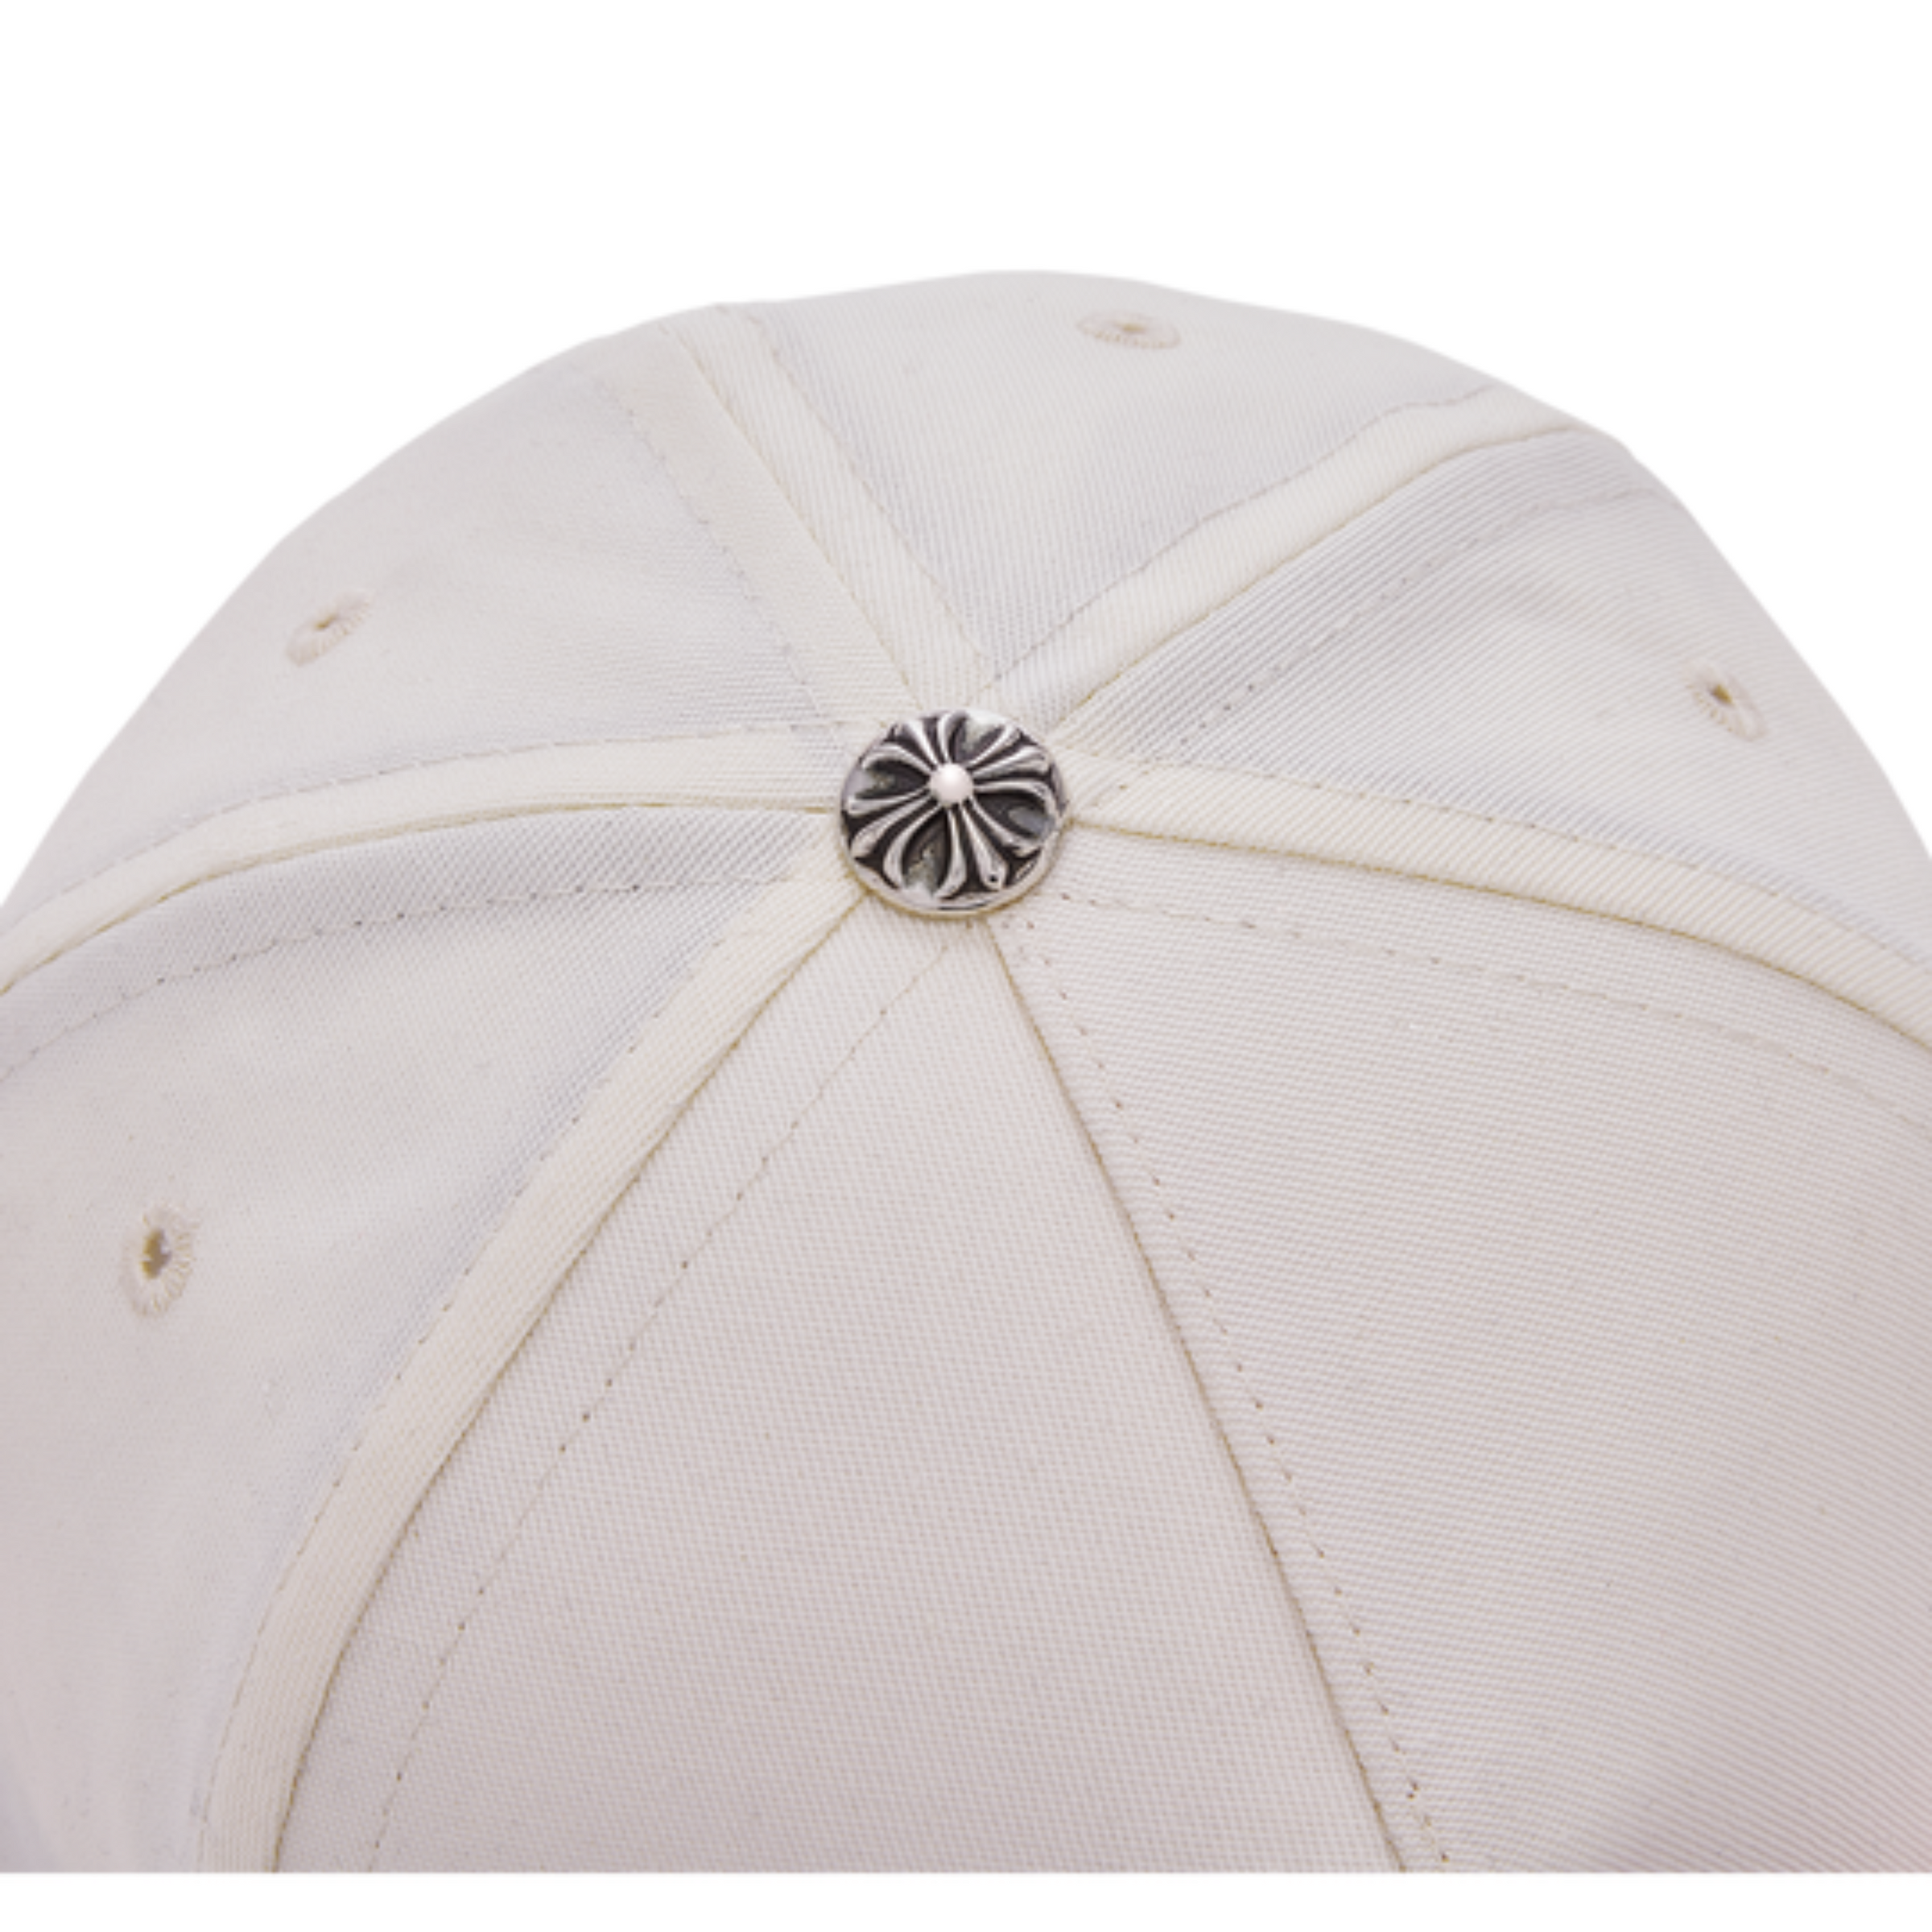 Chrome Hearts Embroidered Versatile Fashion Sun Cap Baseball Cap-black And  White 